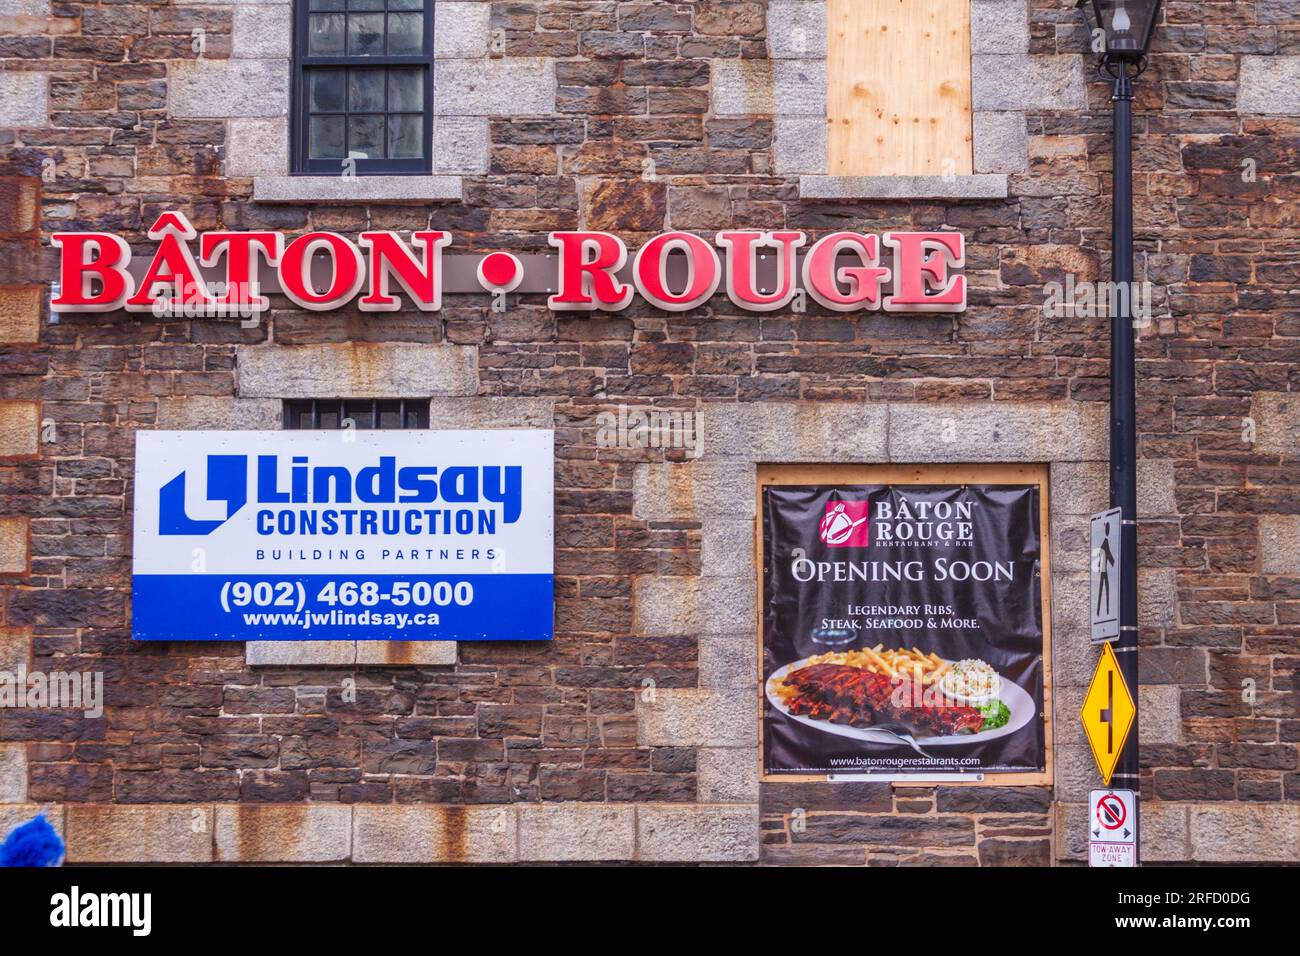 Das Restaurant Baton Rouge wird in Downtown Halifax, Nova Scotia, Kanada eröffnet. Stockfoto